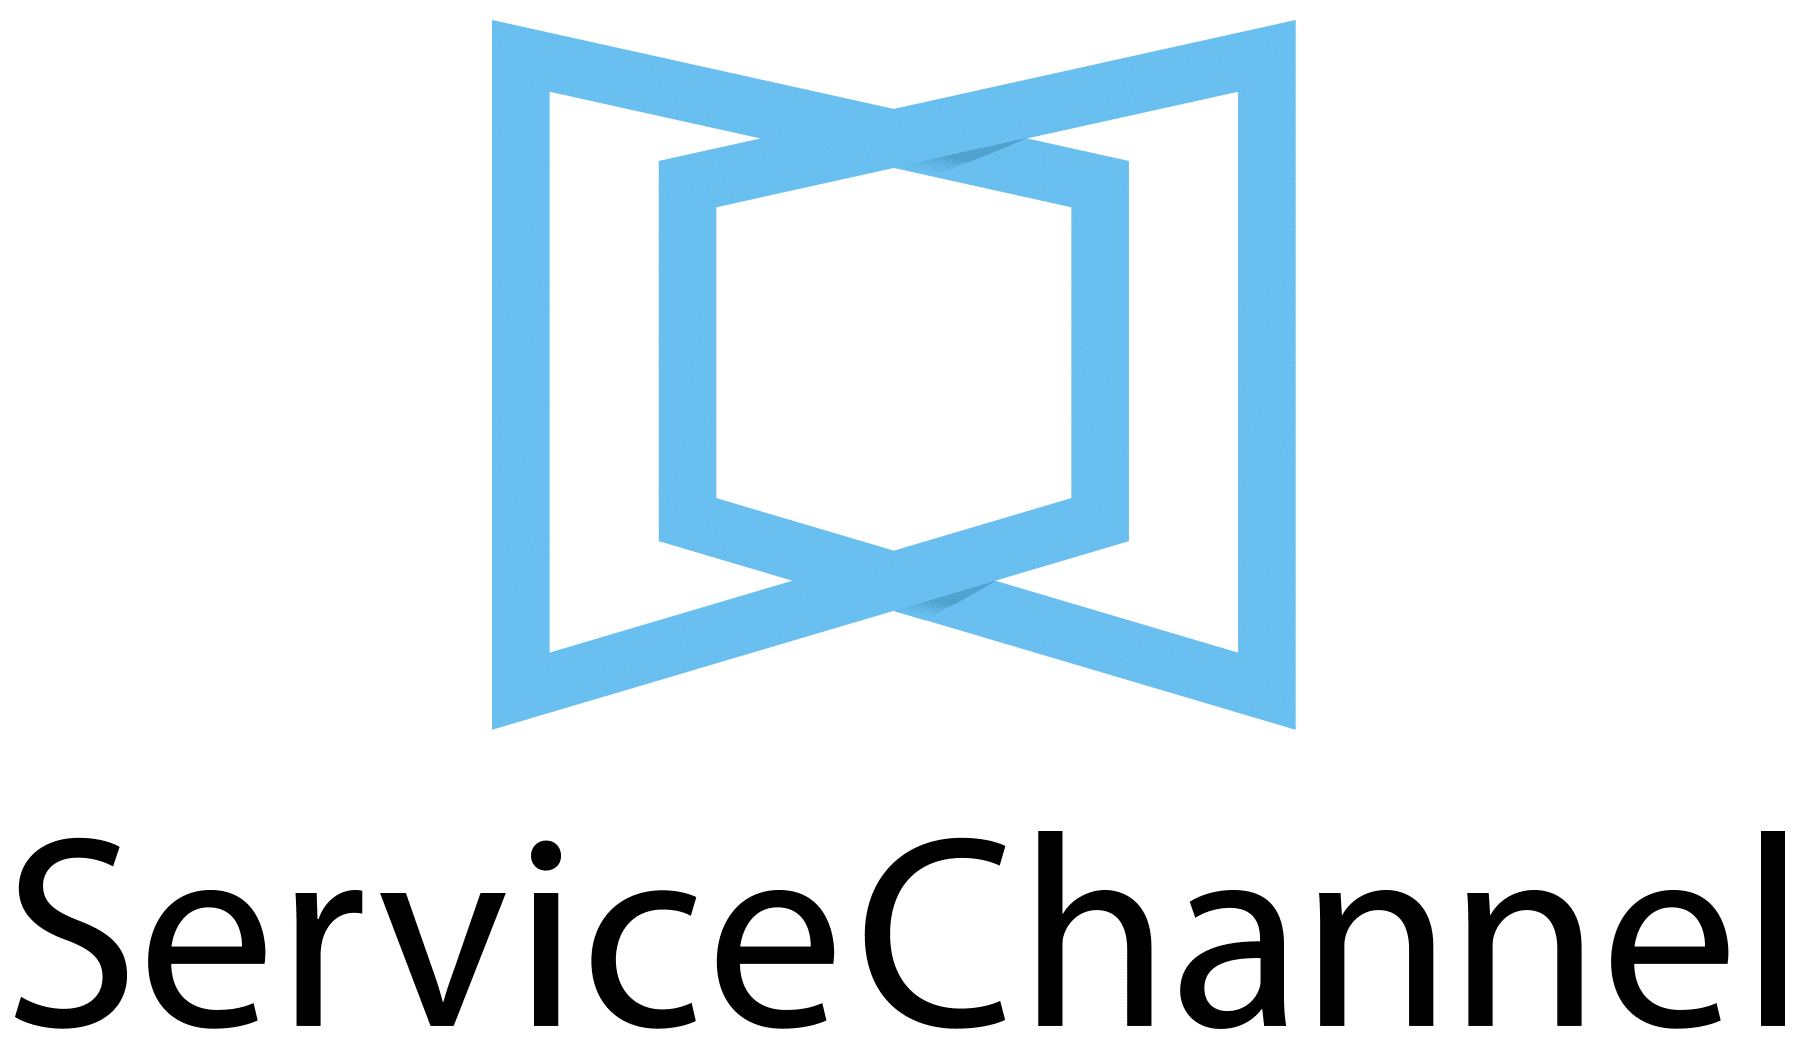 CMI Mechanical uses Service Channel technology